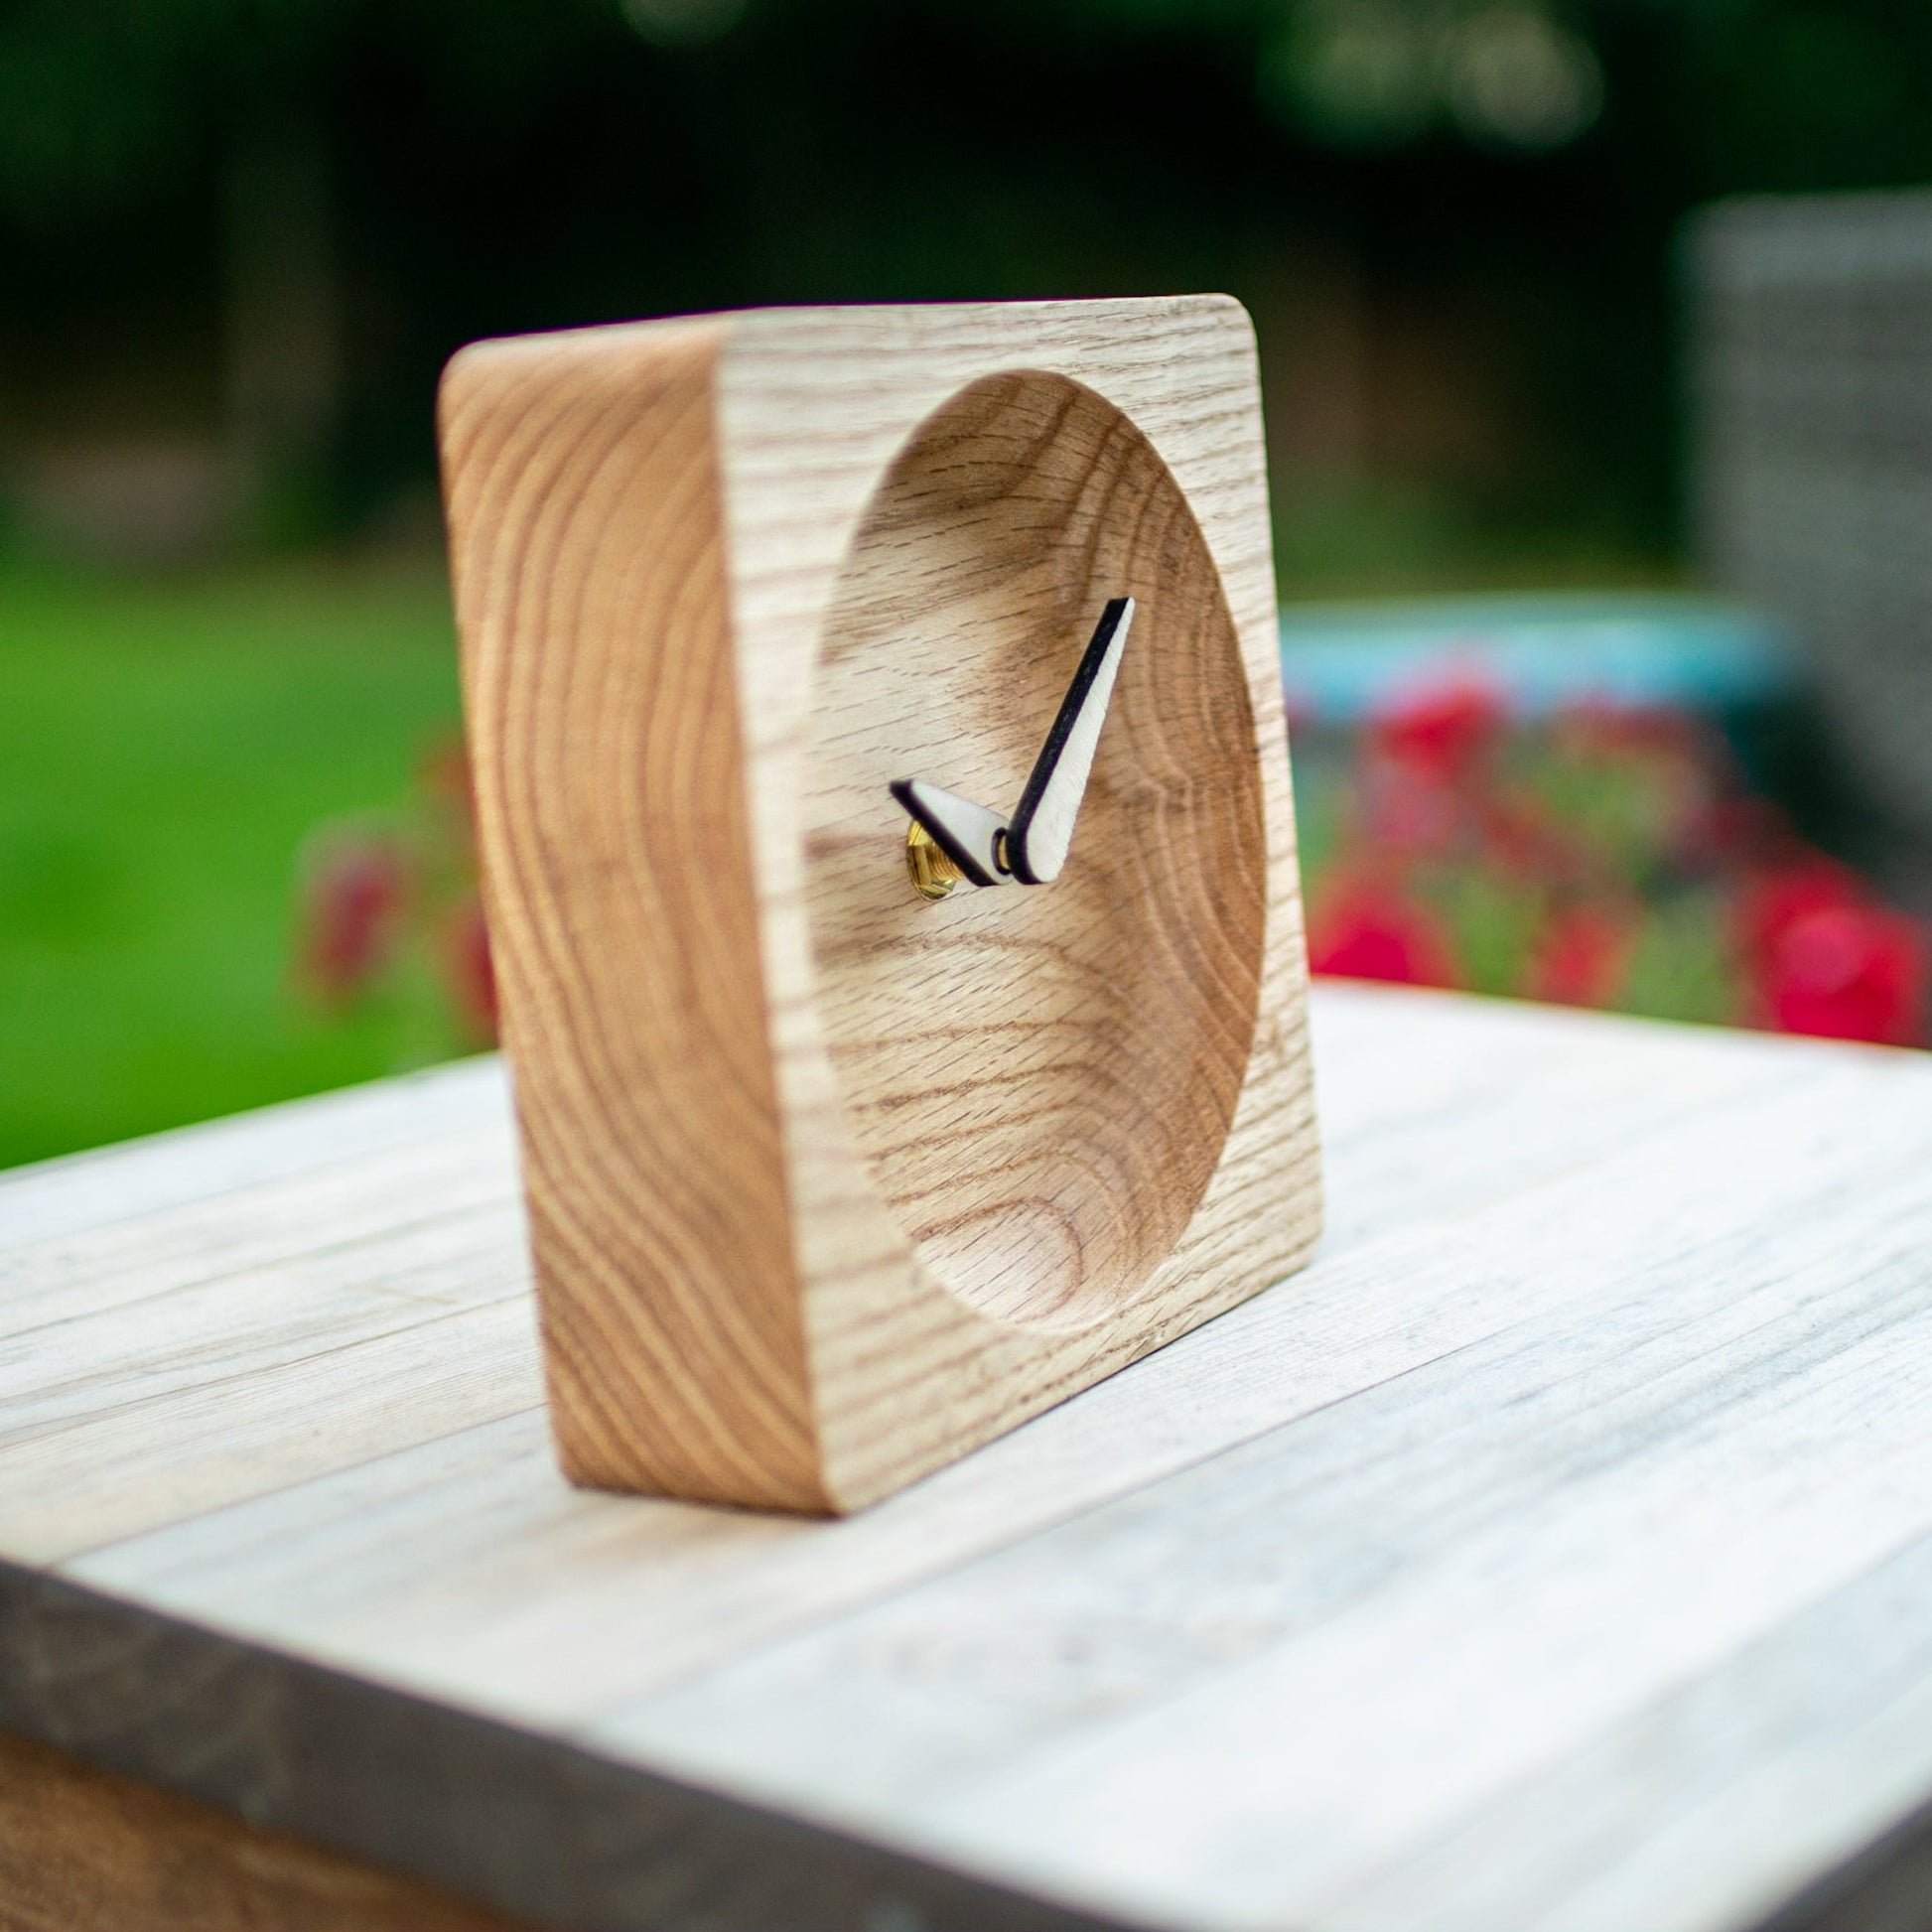 Personalized Solid Oak Desk Clock - Timeless Elegance | ClockDesignCo